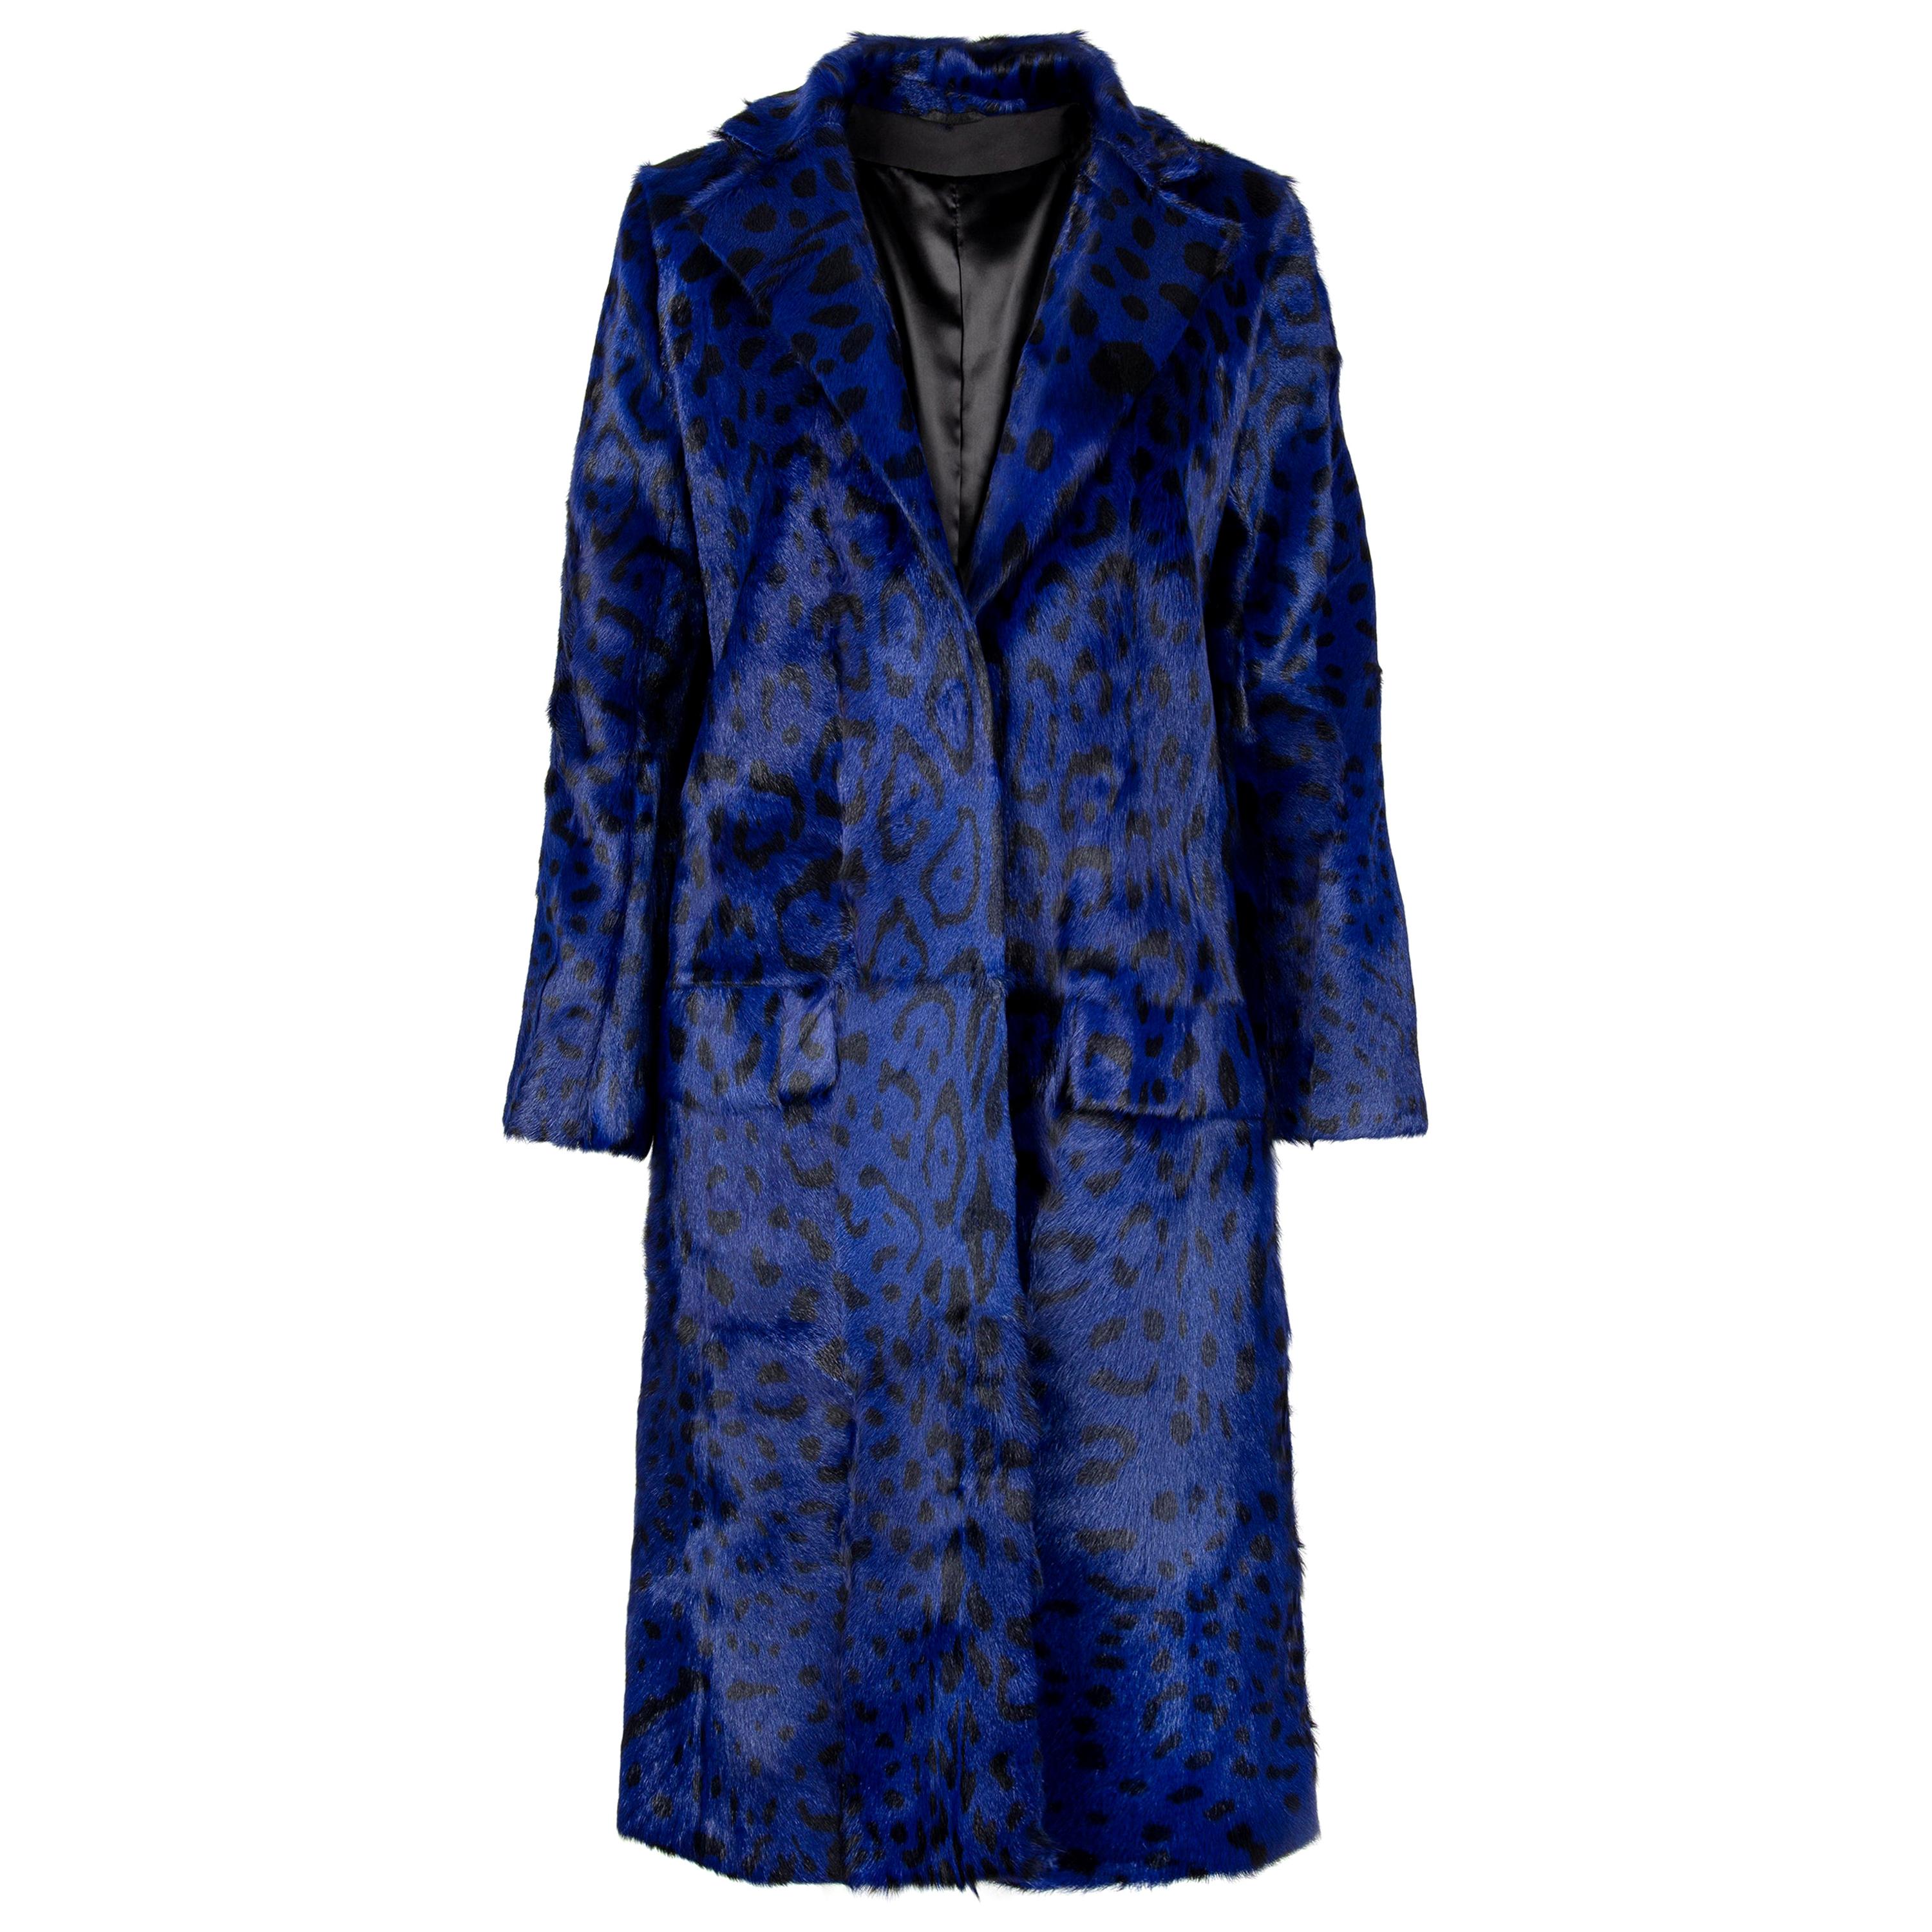 Verheyen London Ink Blue Leopard Print Coat in Goat Hair Fur UK 8  For Sale